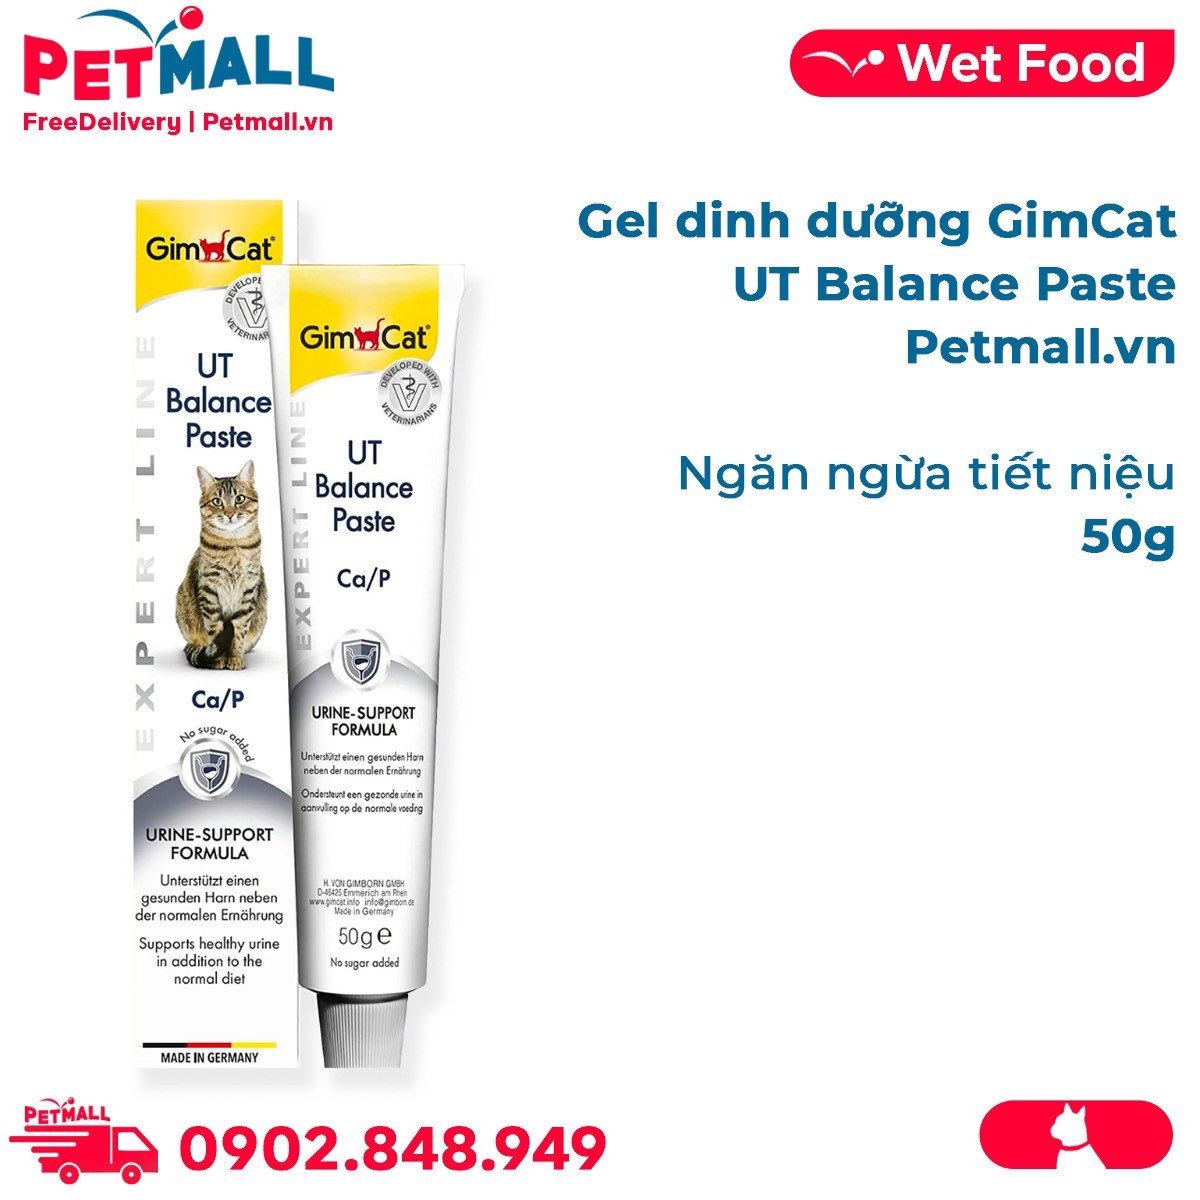 Gel dinh dưỡng GimCat UT Balance Paste 50g - Ngăn ngừa tiết niệu Petmall